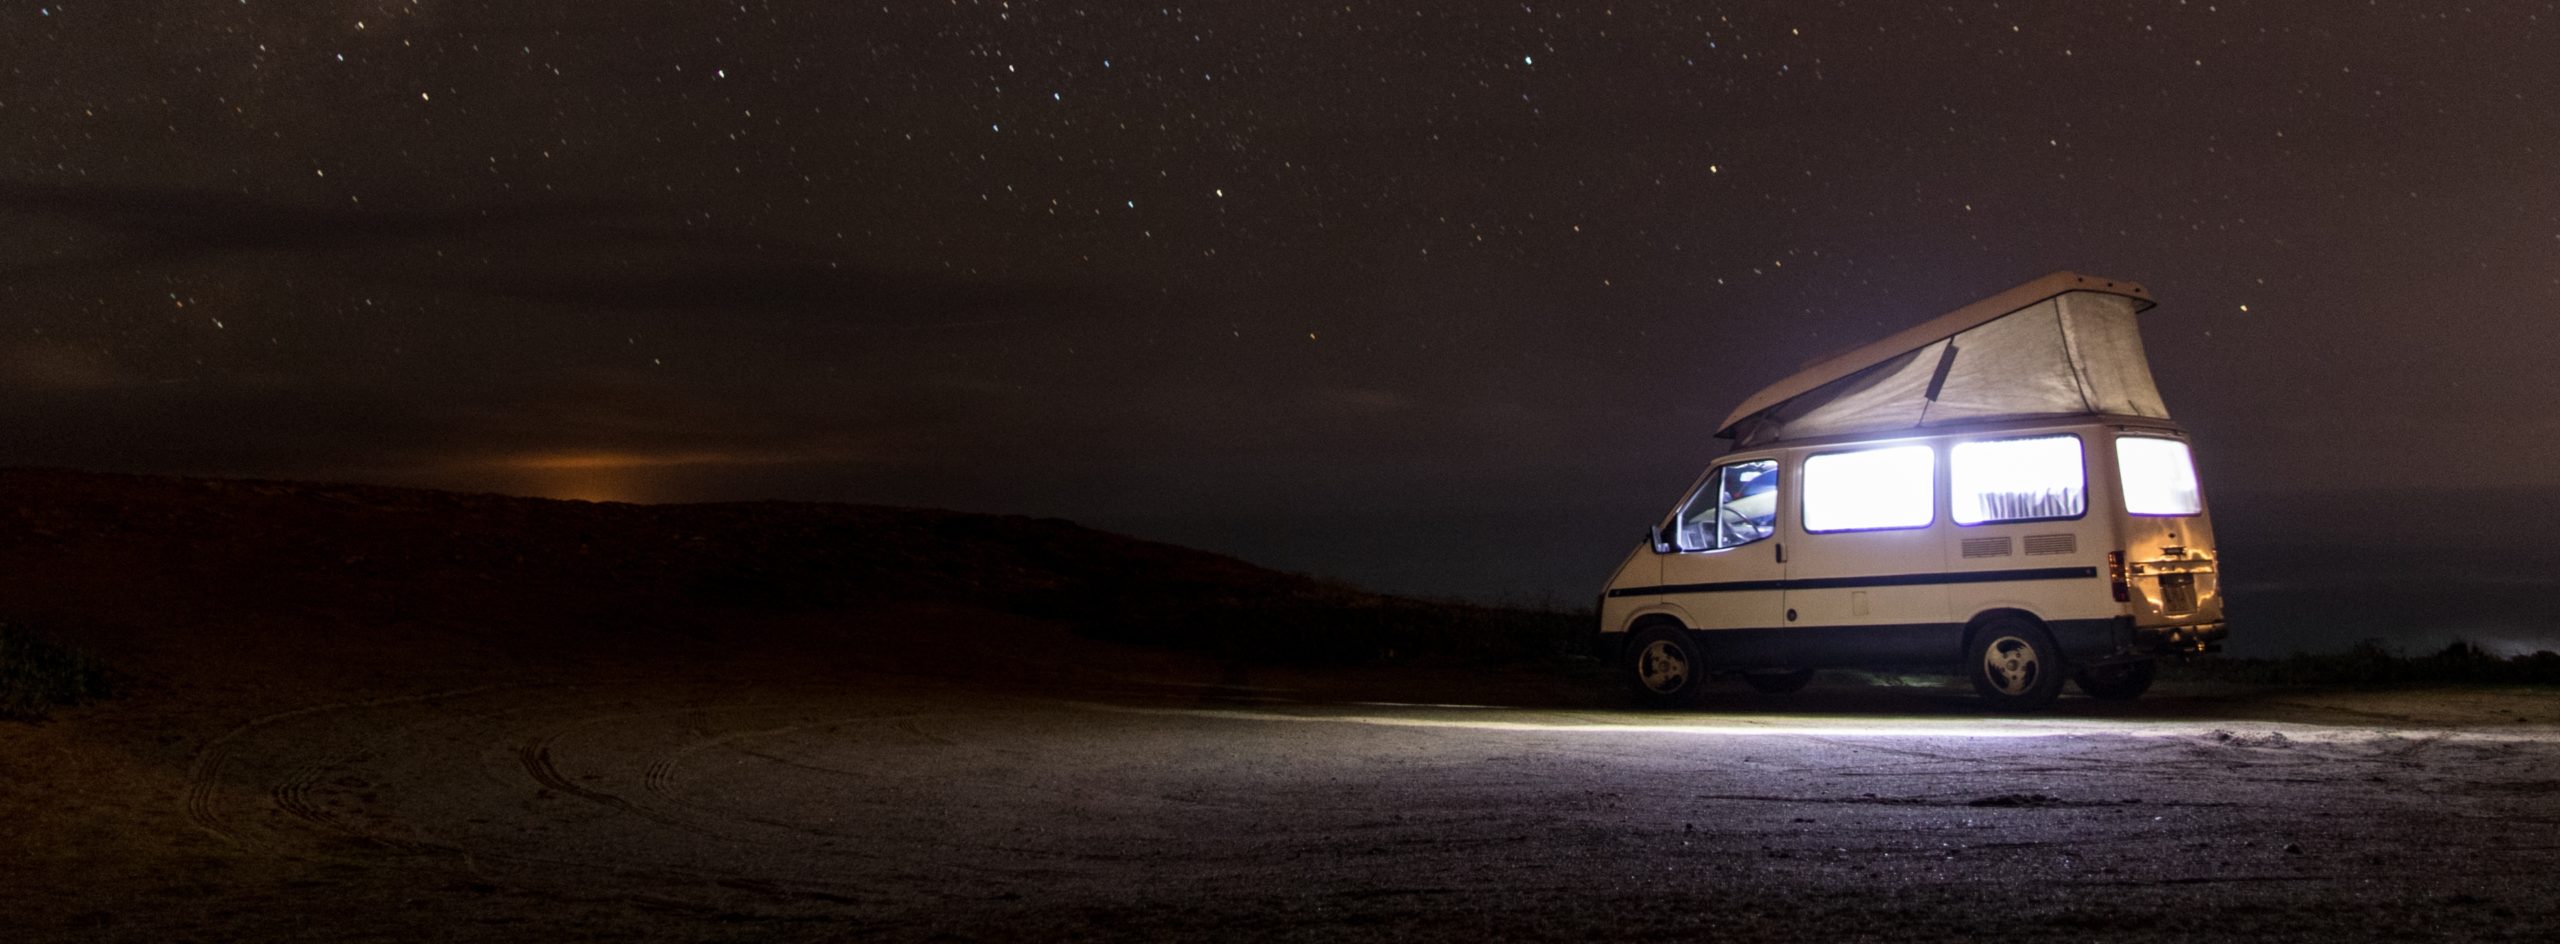 White Class B RV camping under the stars in a desert